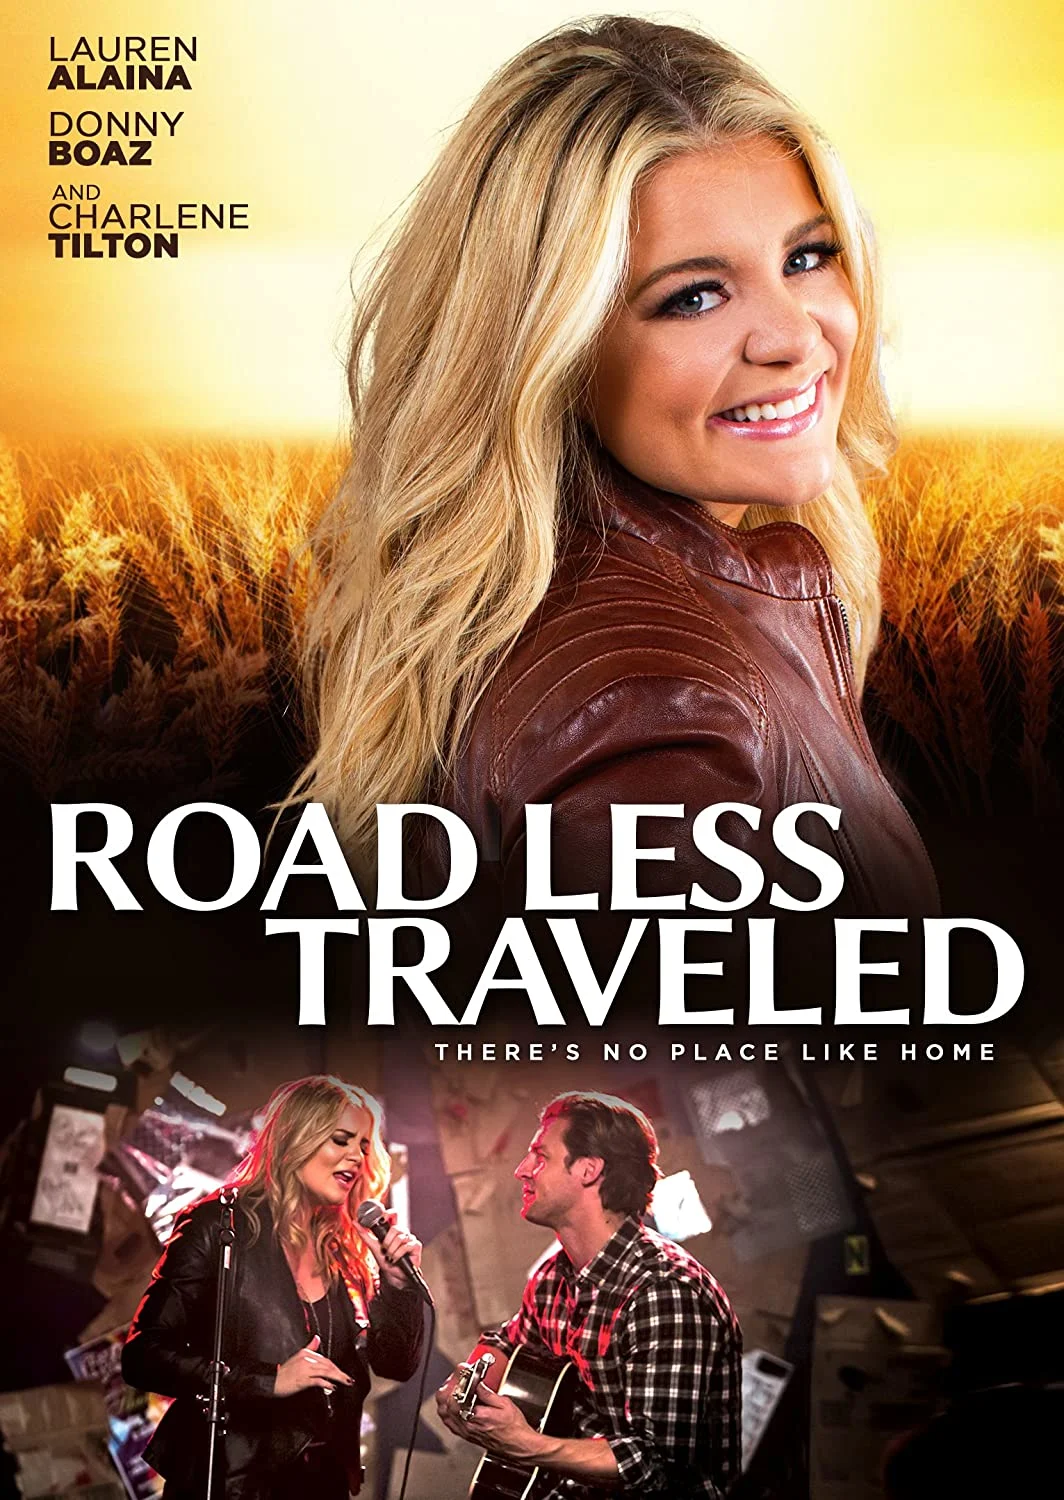 Road Less Traveled (DVD)